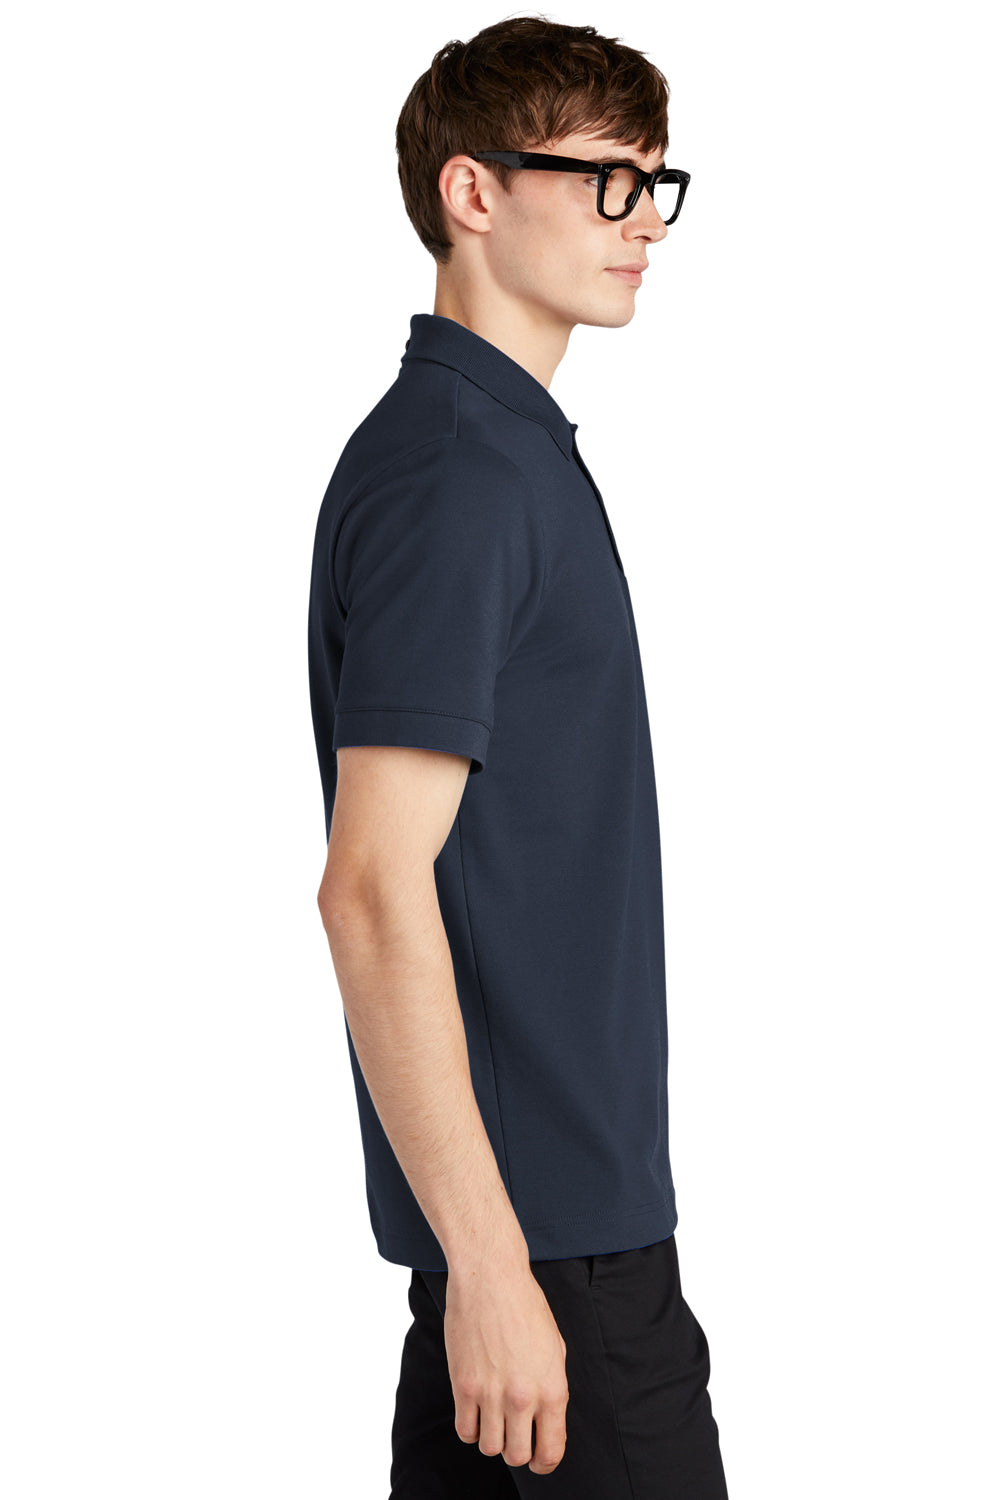 Mercer+Mettle MM1000 Stretch Pique Short Sleeve Polo Shirt Night Navy Blue Side